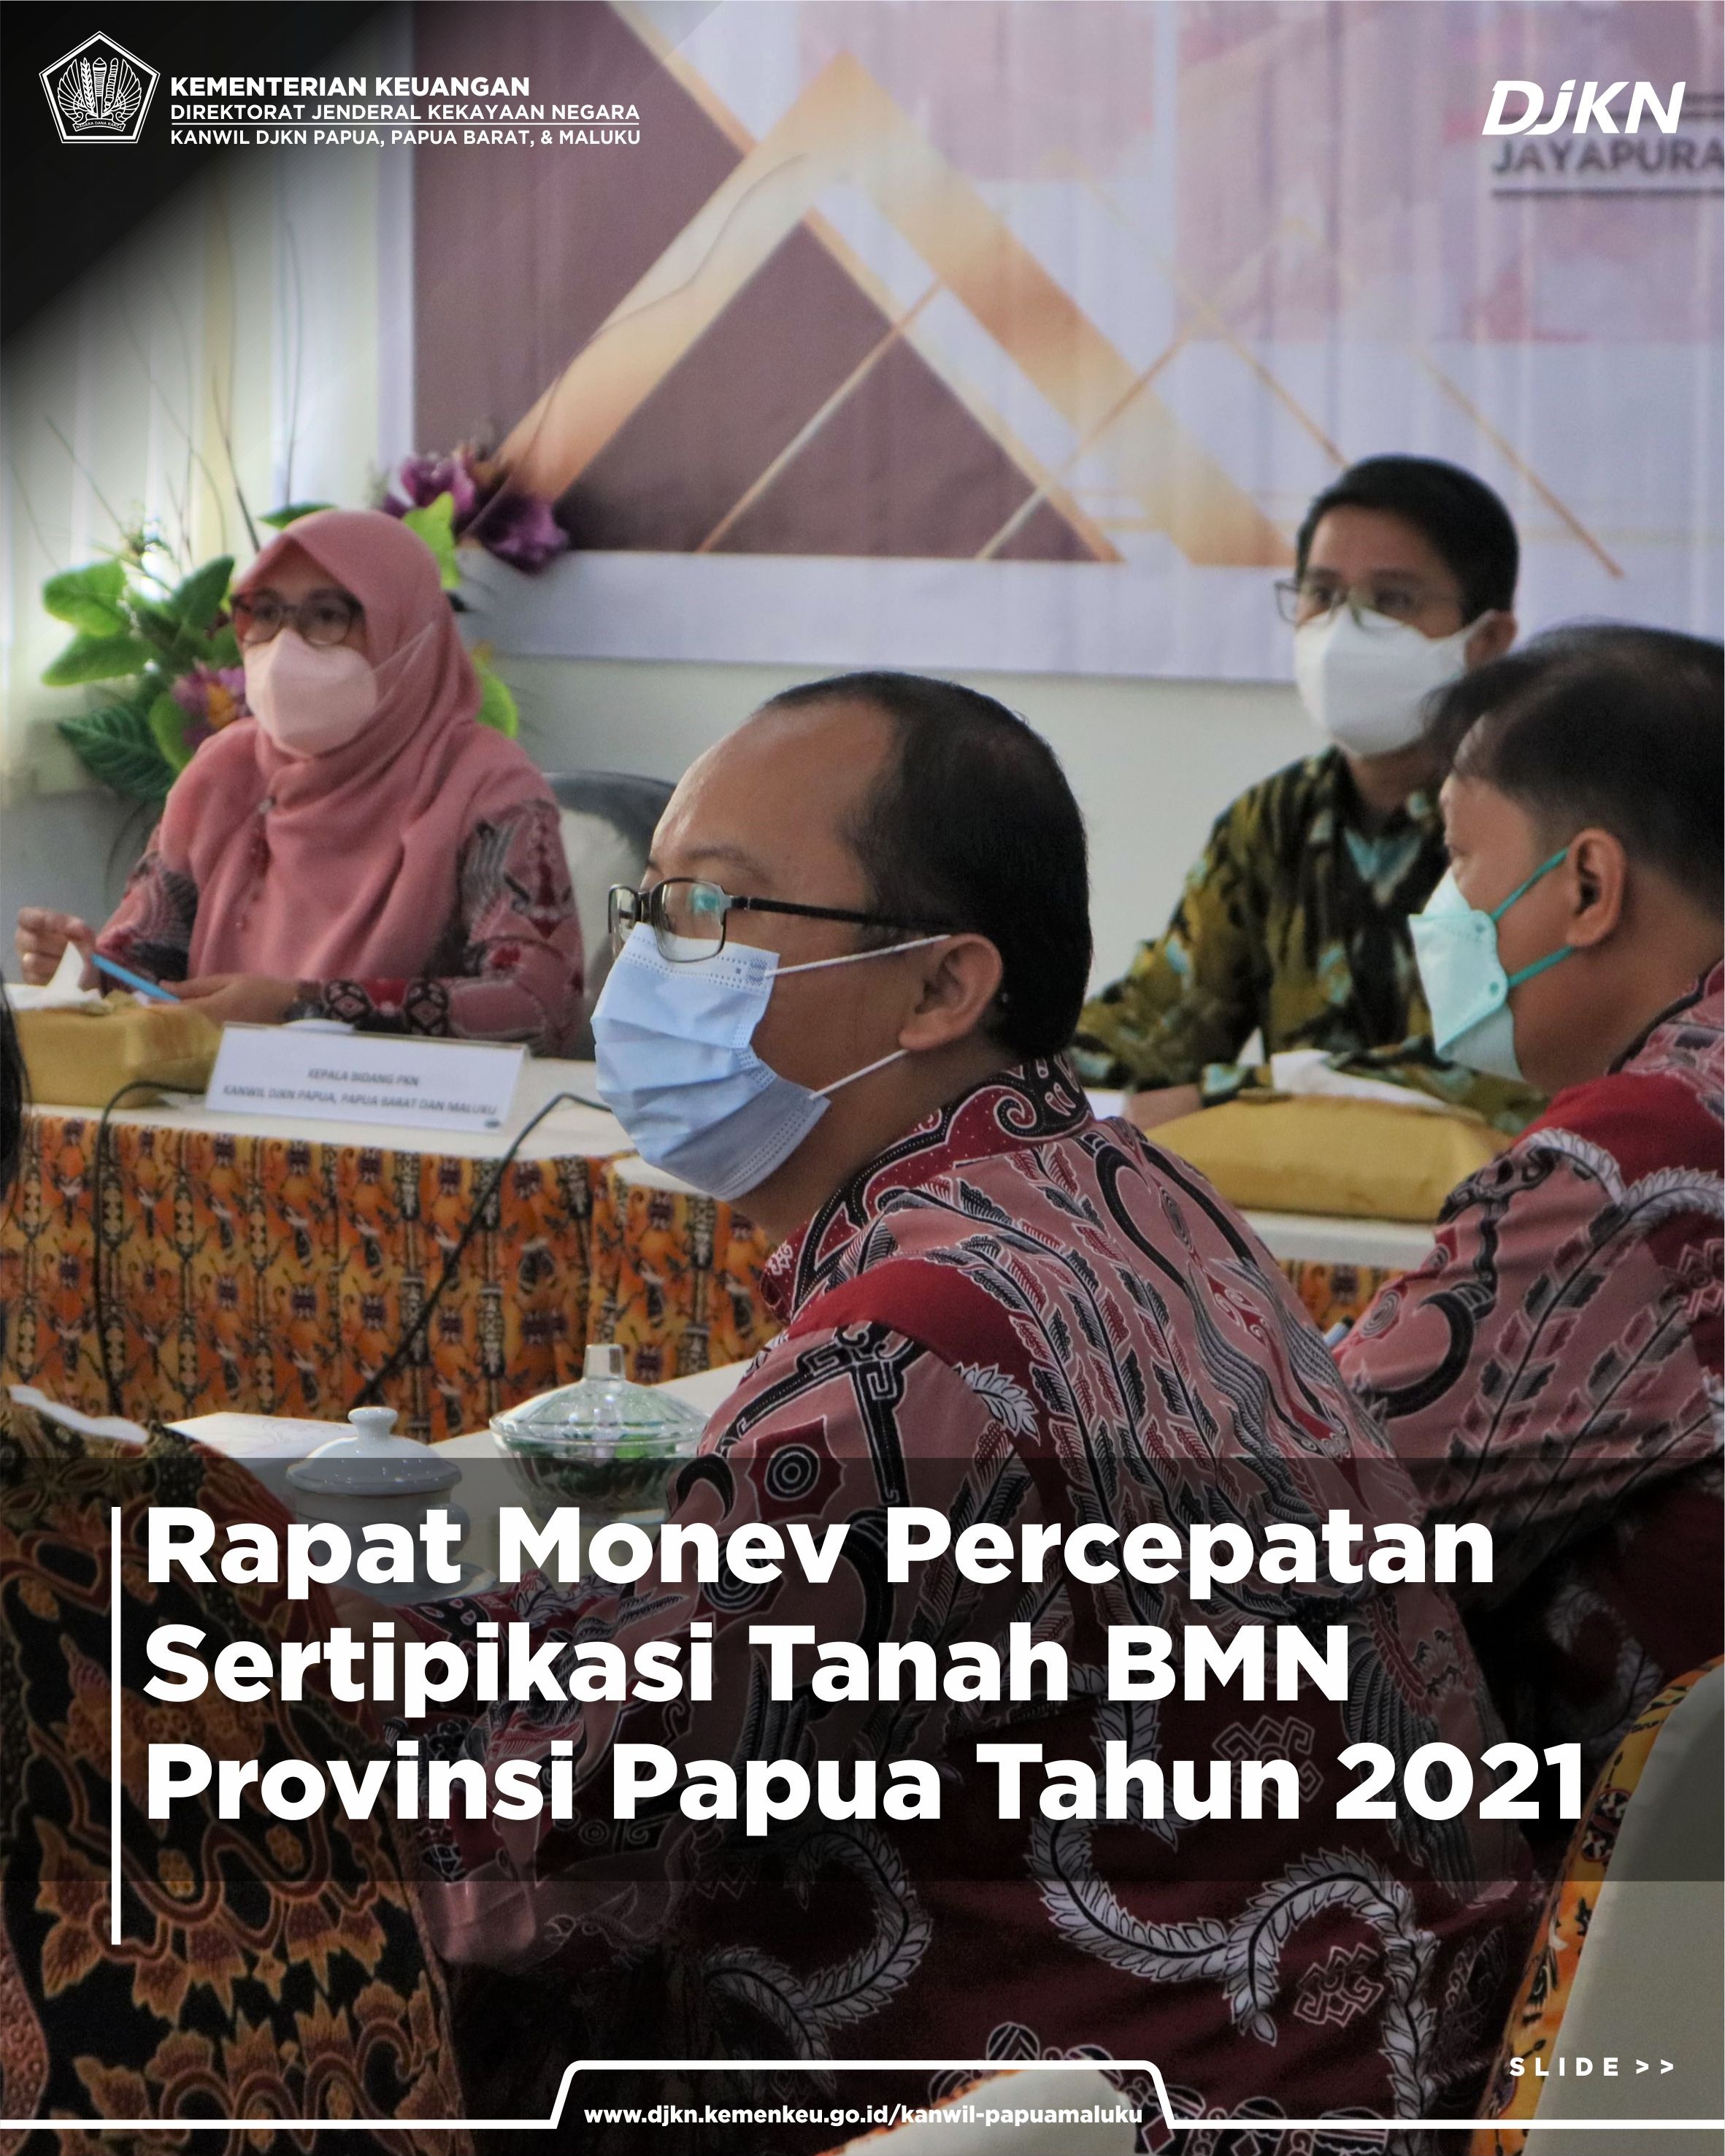 Rapat Monev Percepatan Sertipikasi BMN Berupa Tanah Lingkup Provinsi Papua